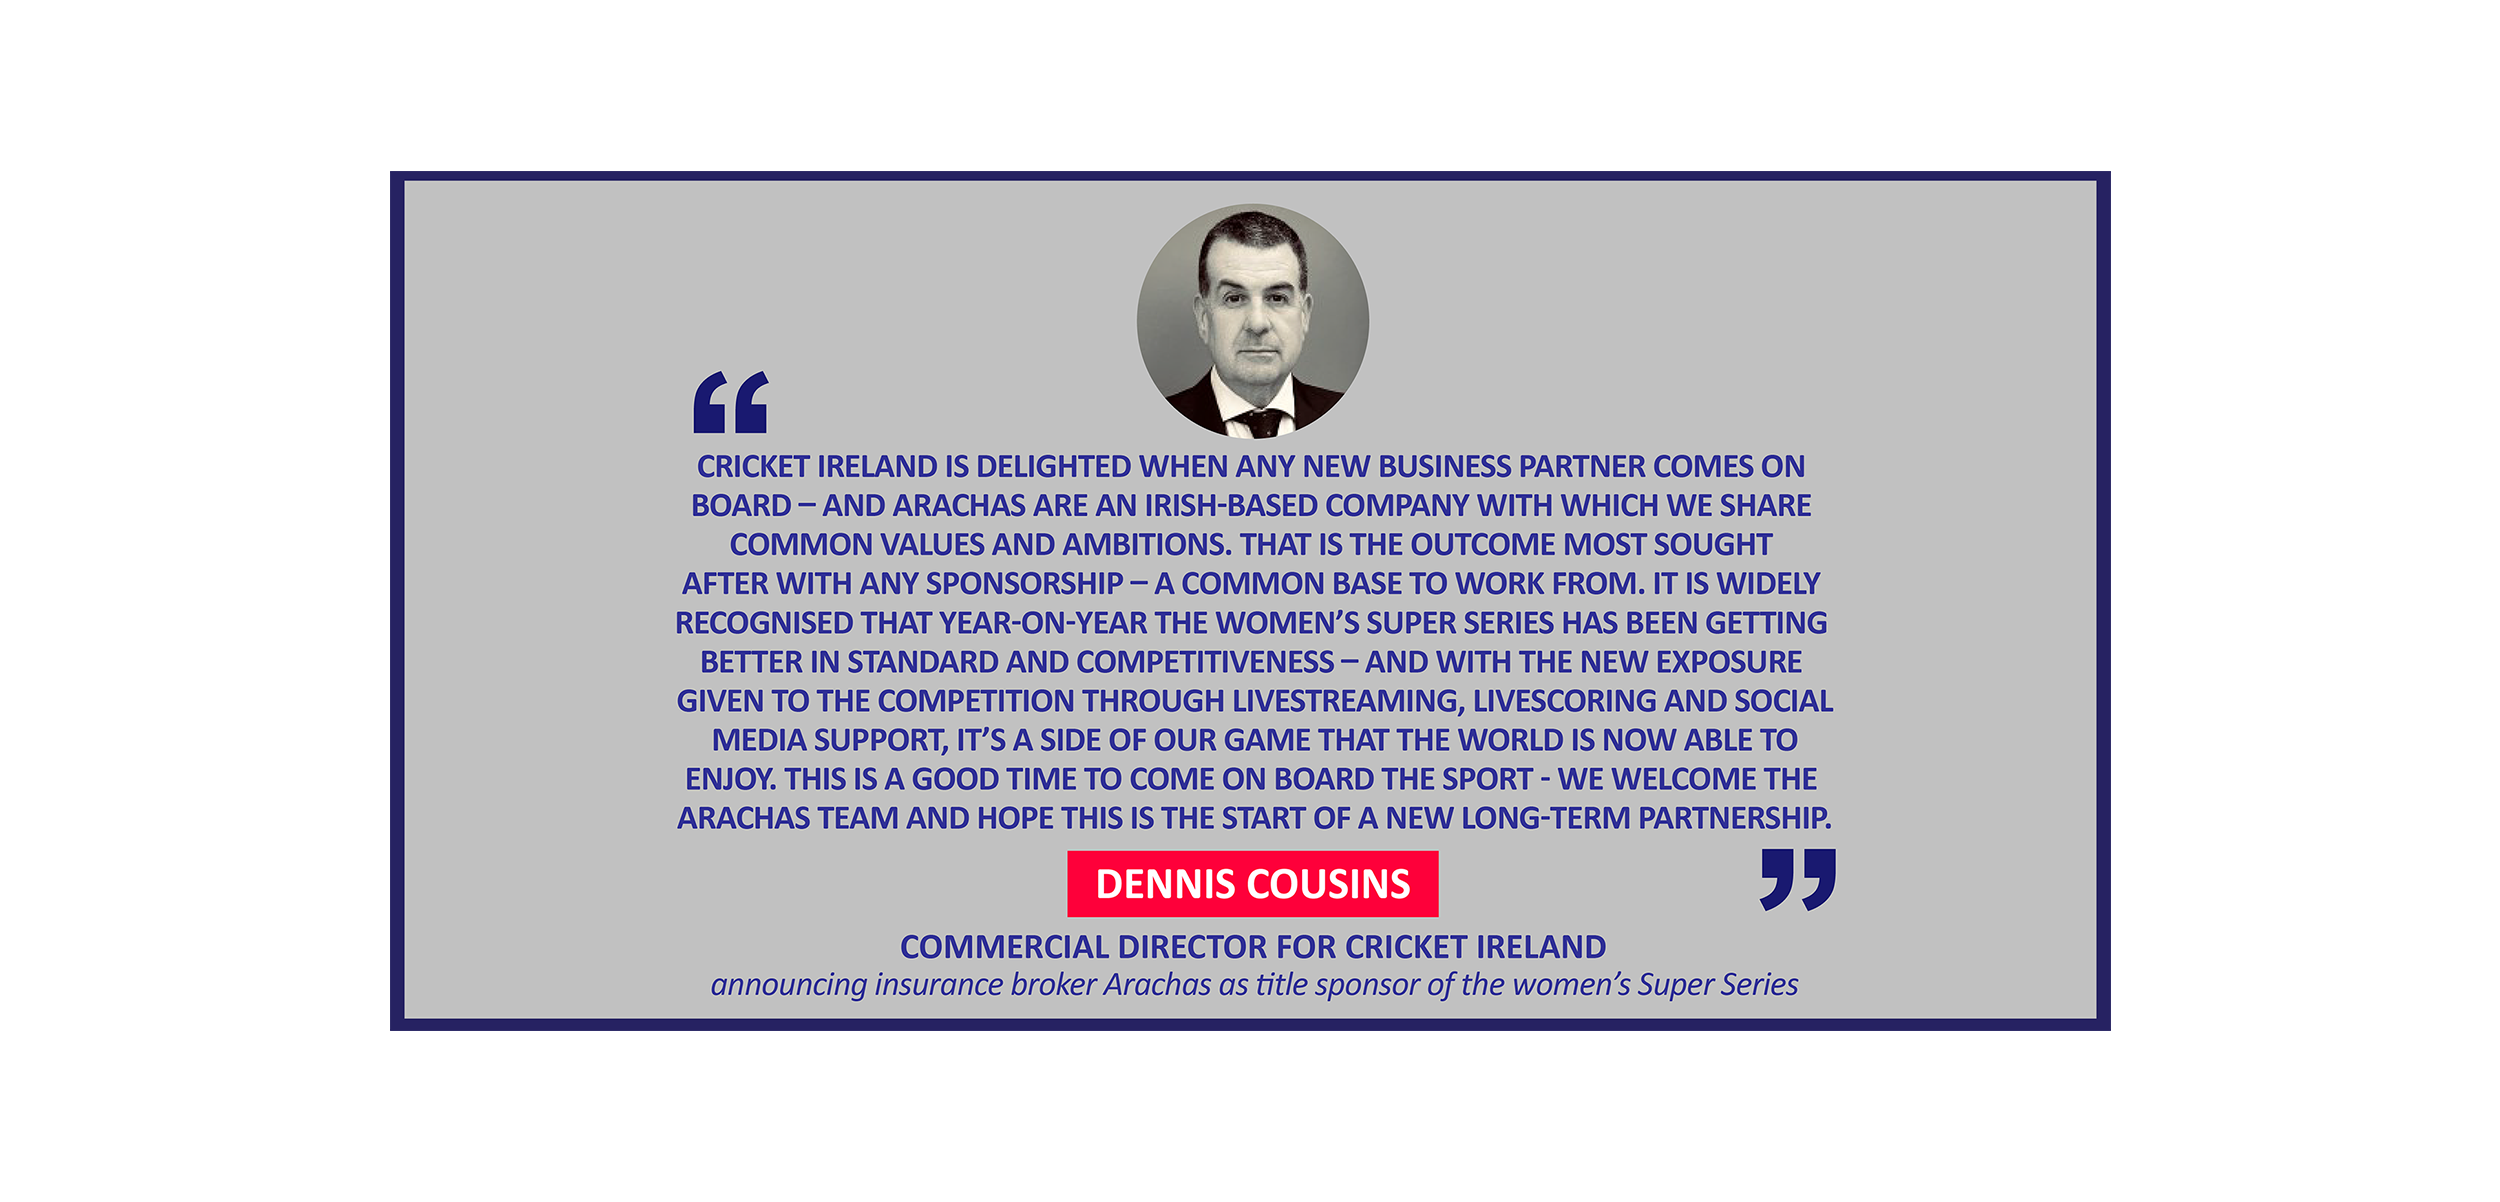 Dennis Cousins, Commercial Director for Cricket Ireland announcing insurance broker Arachas as title sponsor of the women’s Super Series